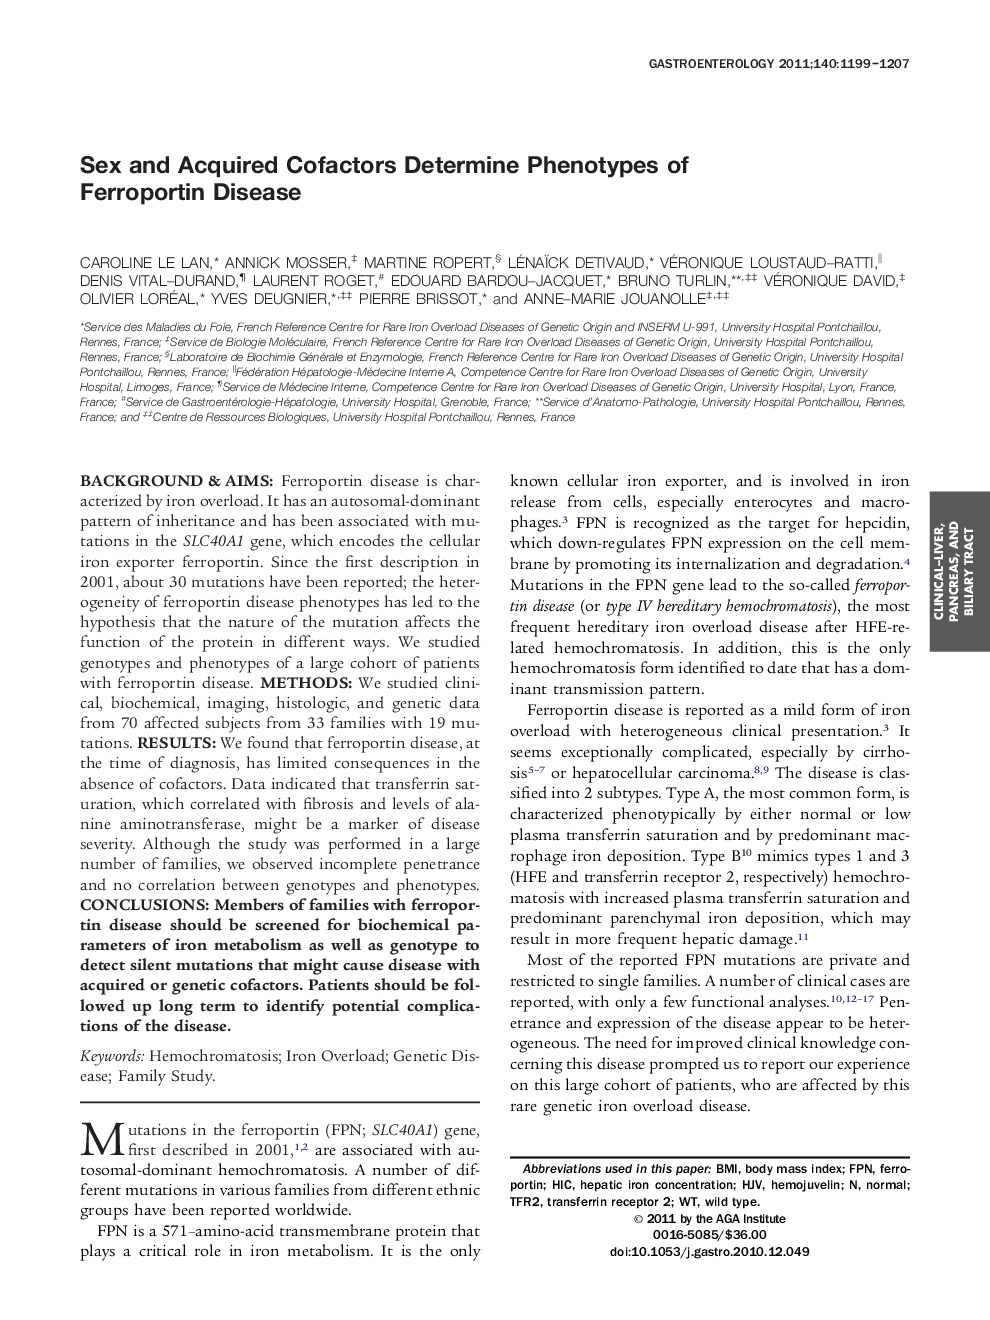 Sex and Acquired Cofactors Determine Phenotypes of Ferroportin Disease